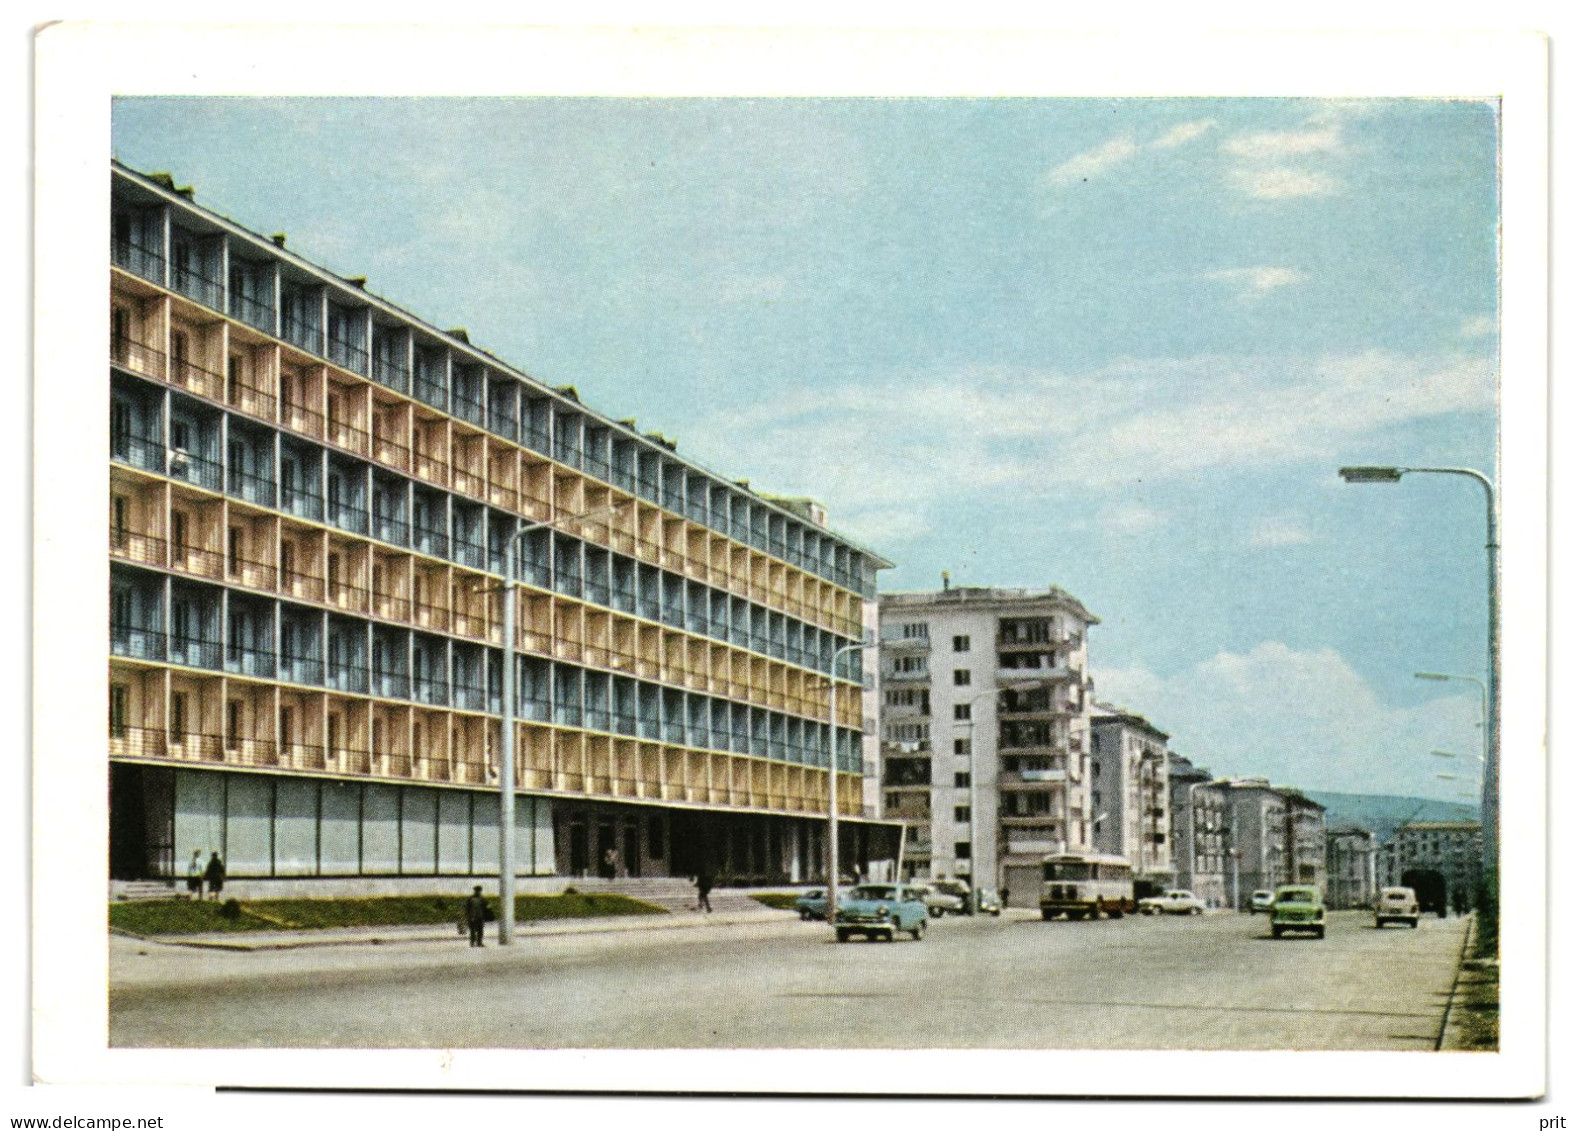 Hotel Abkhazia, Tbilisi Soviet Georgia USSR 1965 3Kop Stamped Postal Stationery Card Postcard Unused - 1960-69